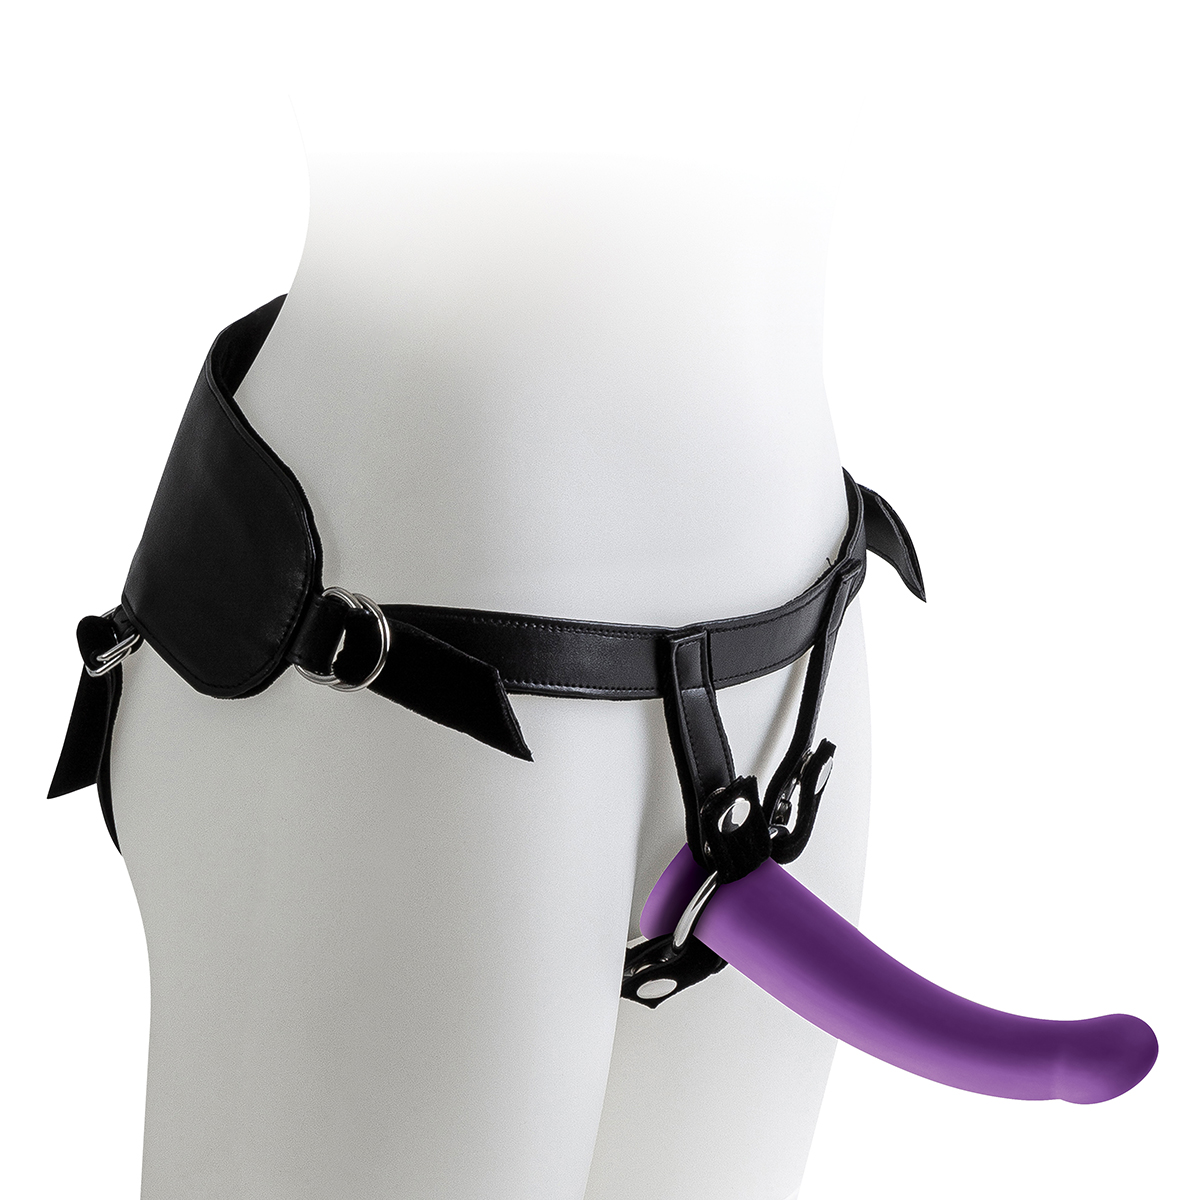 Harness with Purple Dildo – Size L